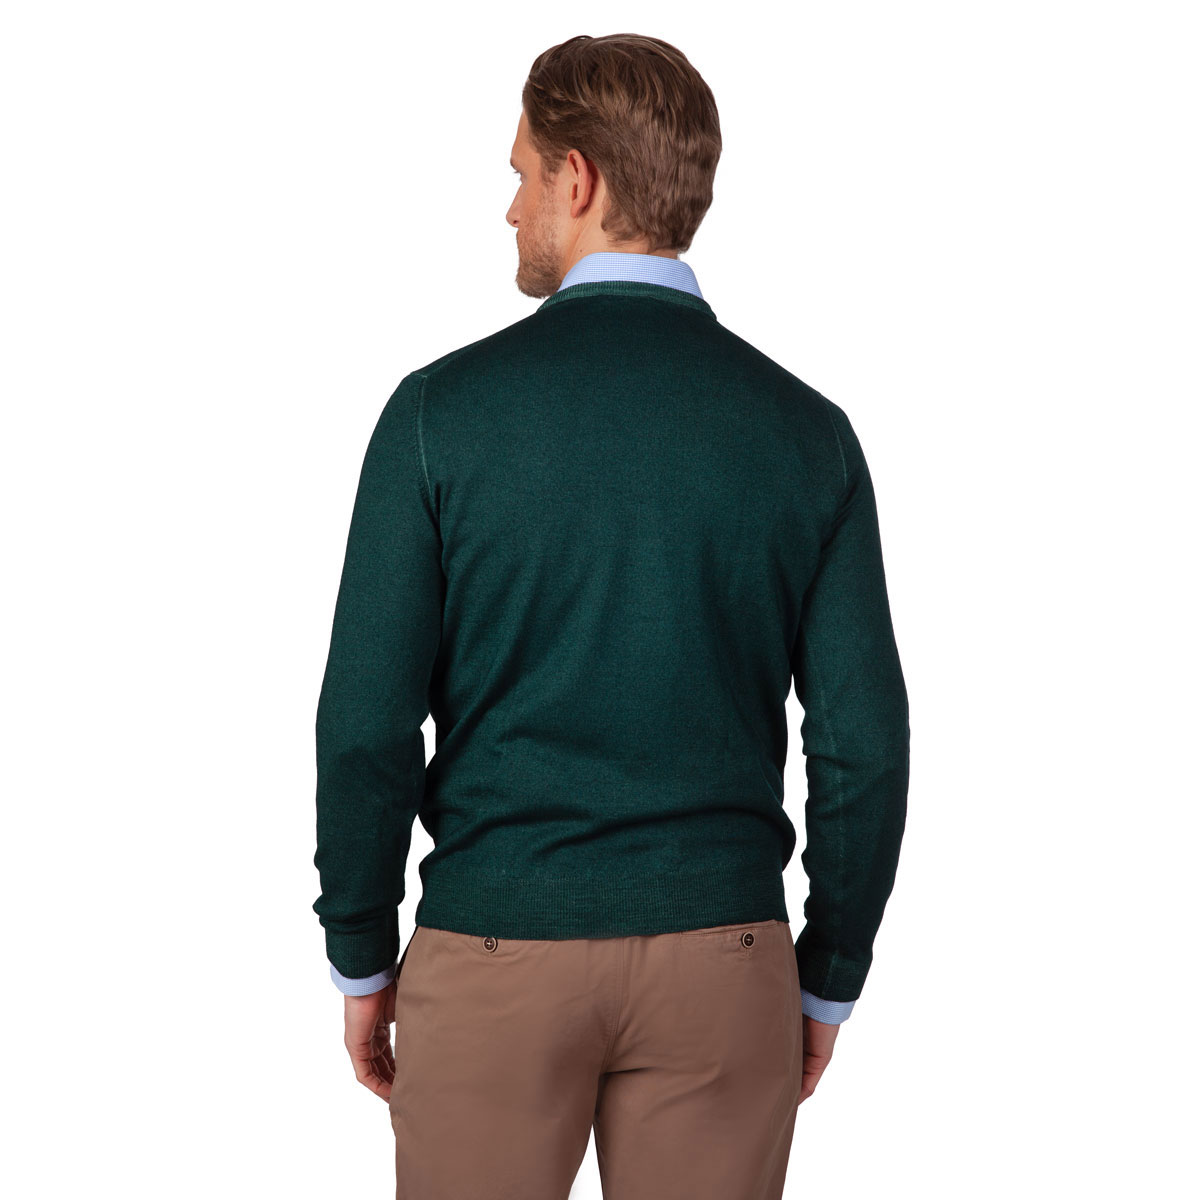 Feinstrick-Pullover Slim Fit in dunkelgrün